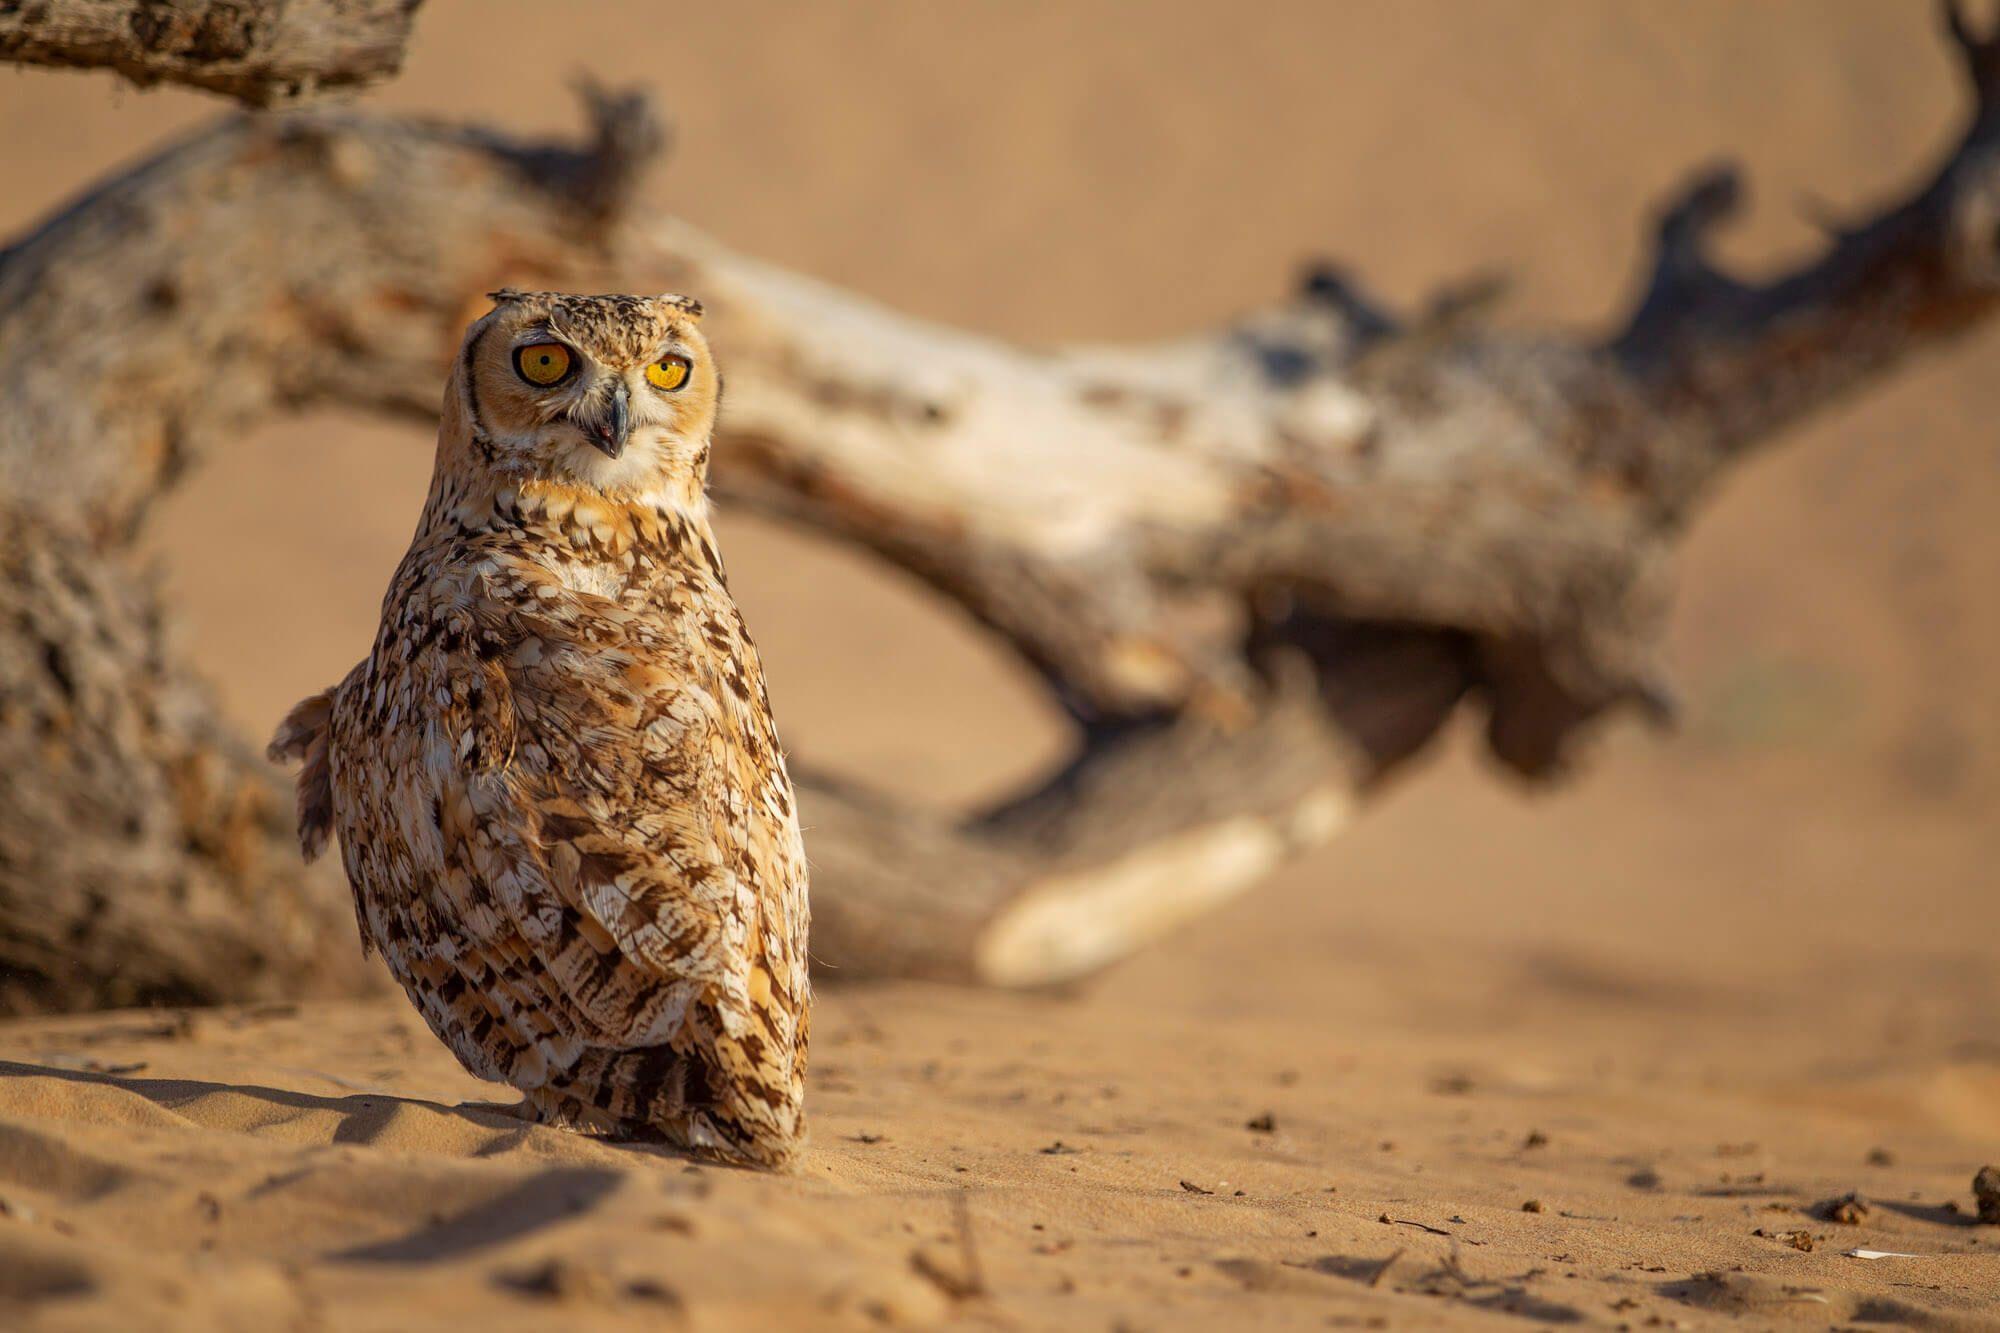 The male Desert Owl’s hunts, providing a warm meal for the young owlets. Photographer: Ali bin Thalith. Location: Al Qudra Lake, Dubai, United Arab Emirates.